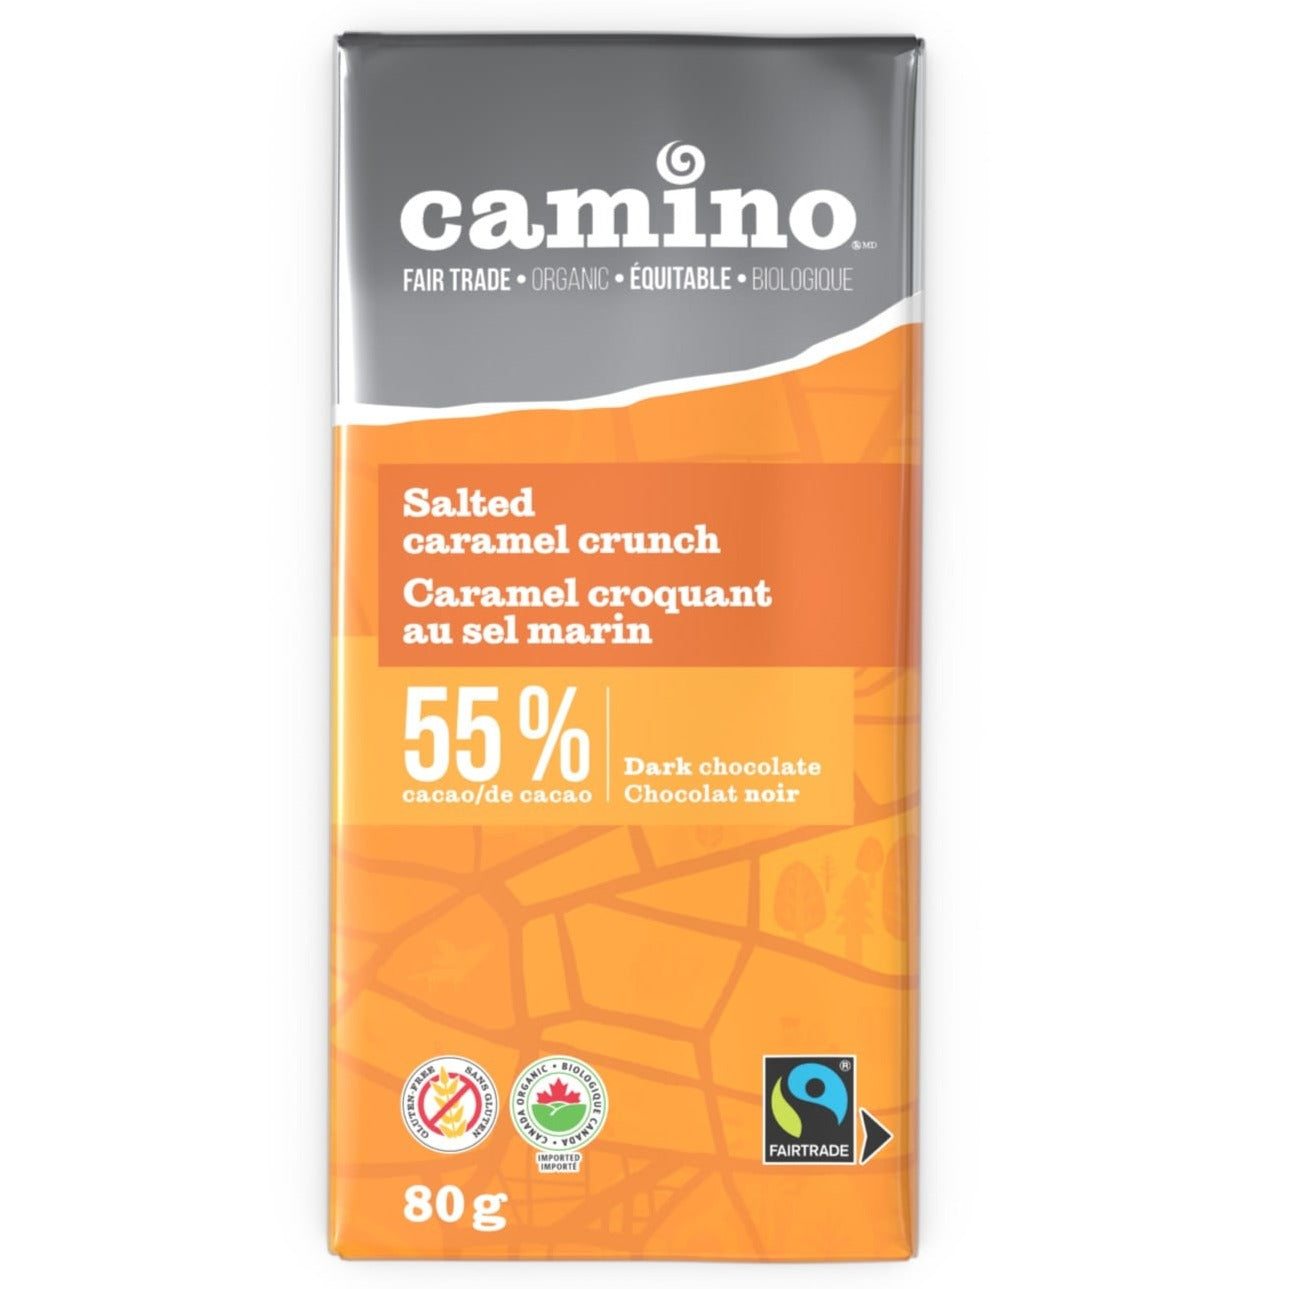 Camino Salted Caramel Crunch